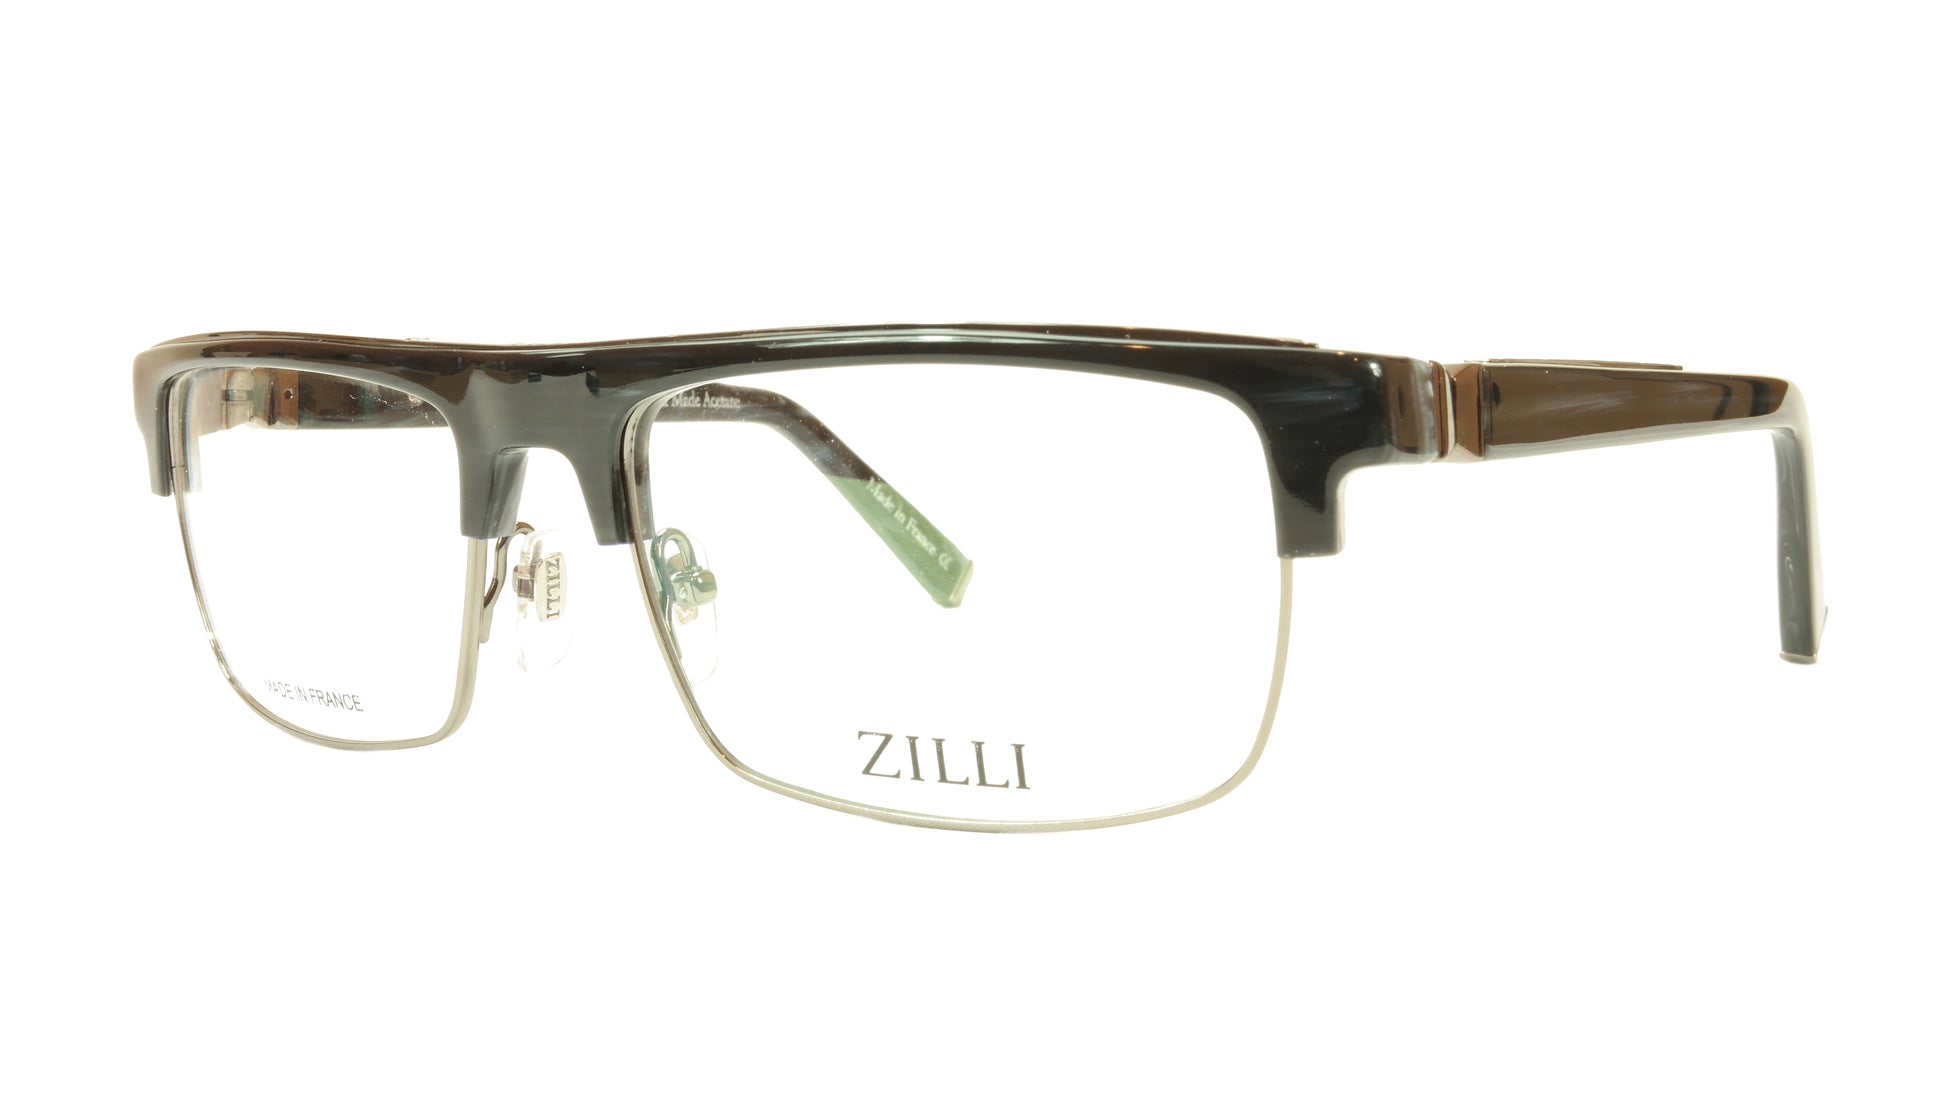 ZILLI Eyeglasses Frame Acetate Titanium France Hand Made ZI 60005 C03 - Frame Bay